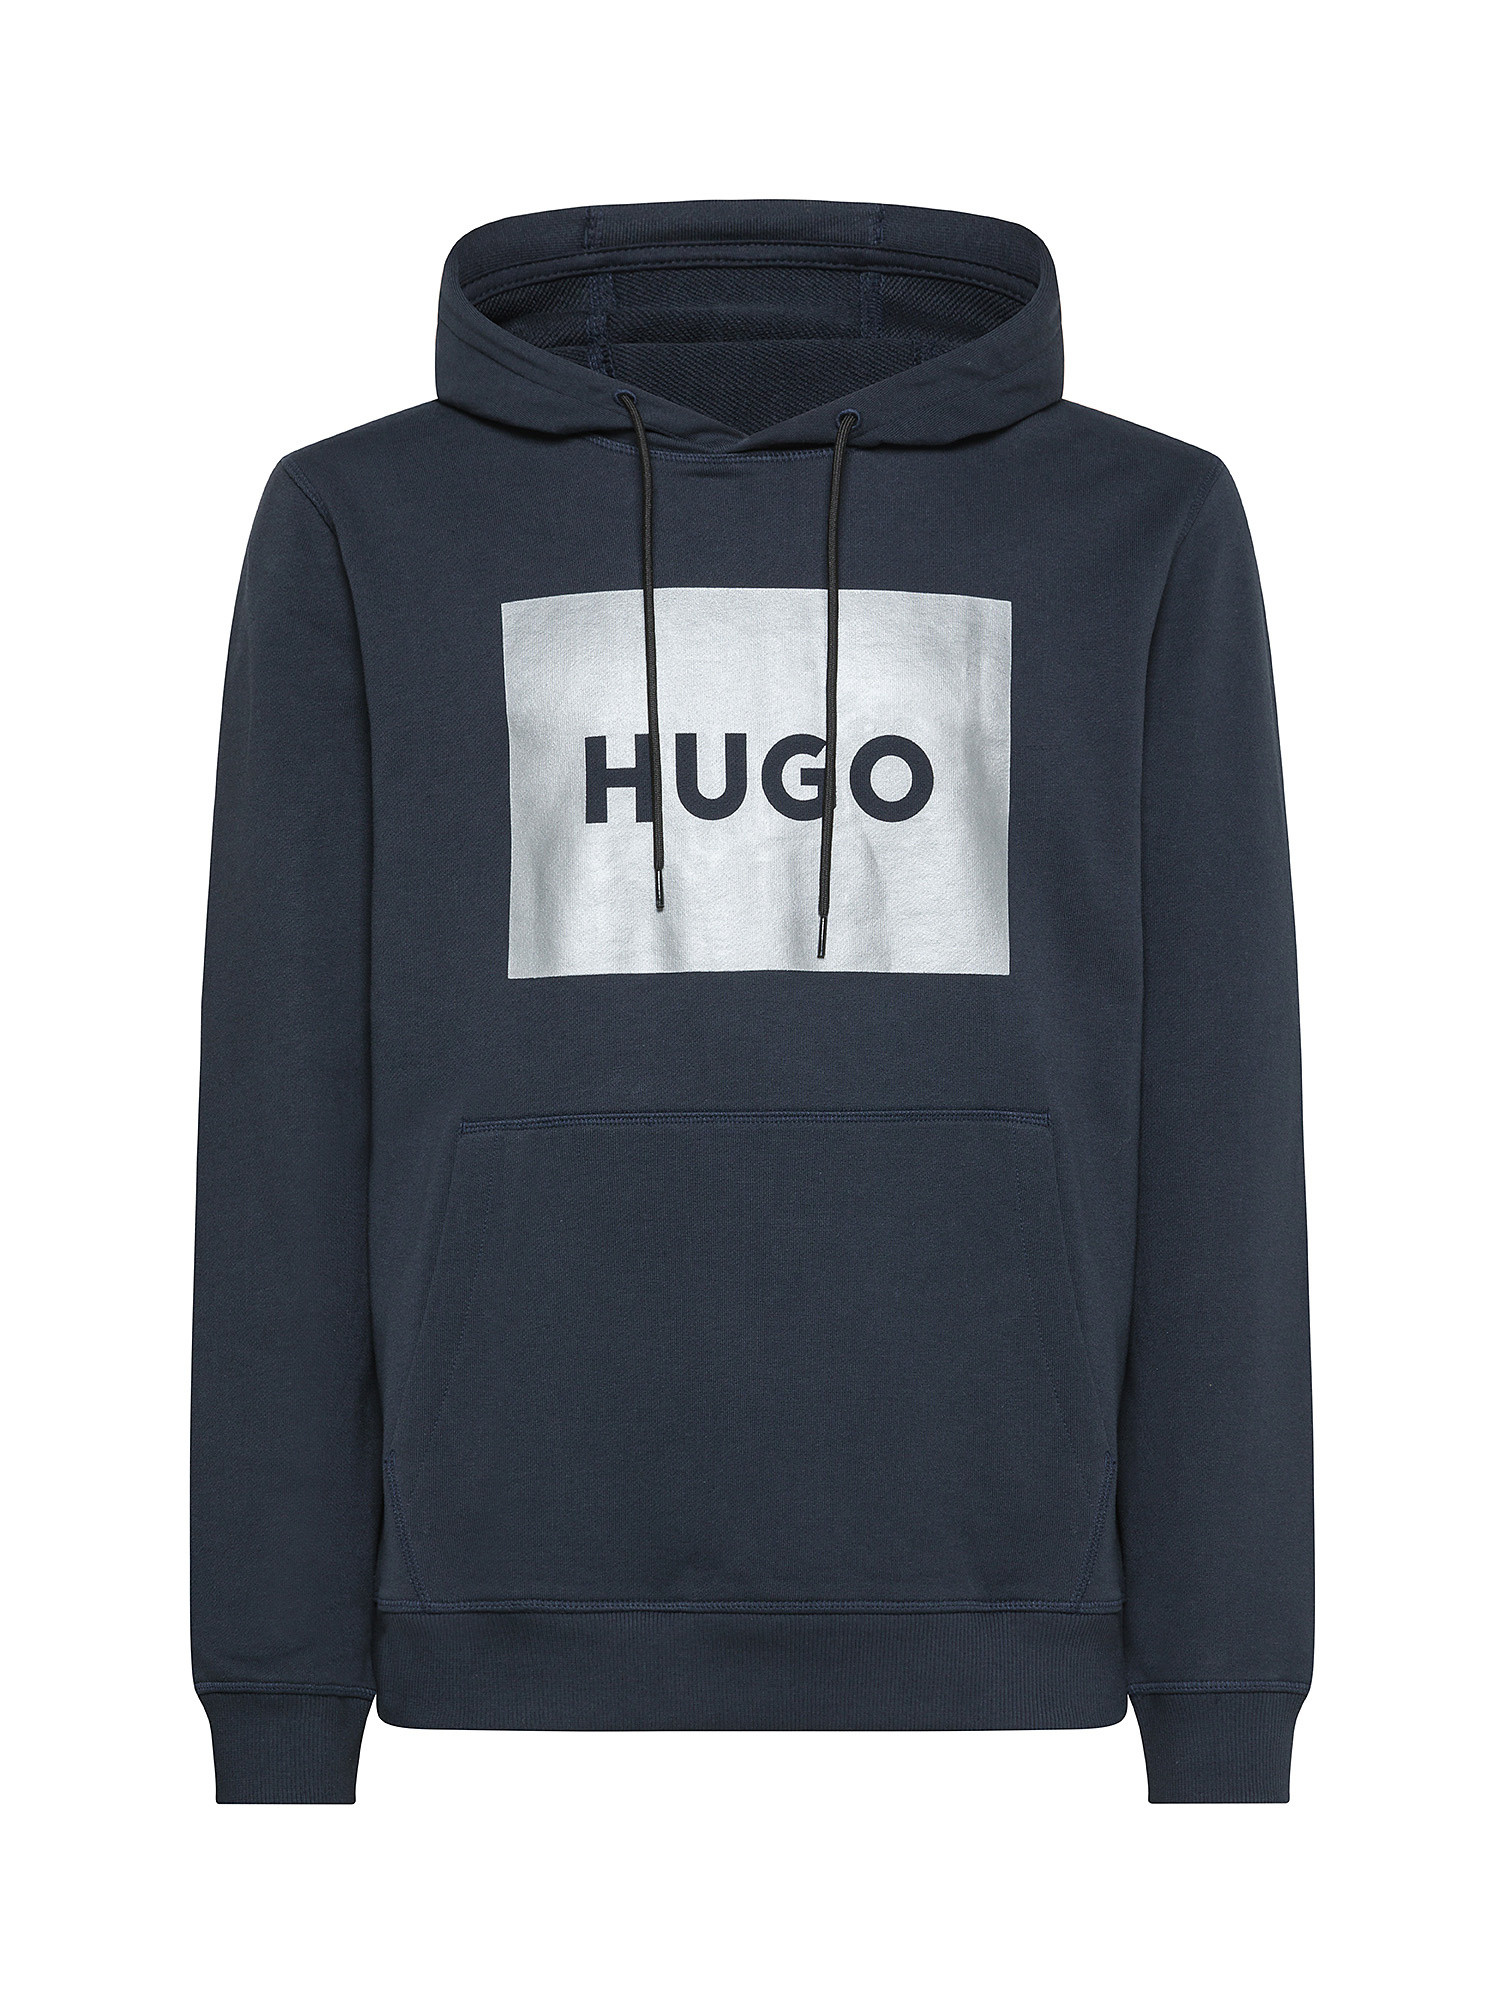 Hugo - Felpa con logo stampato in cotone, Blu scuro, large image number 0